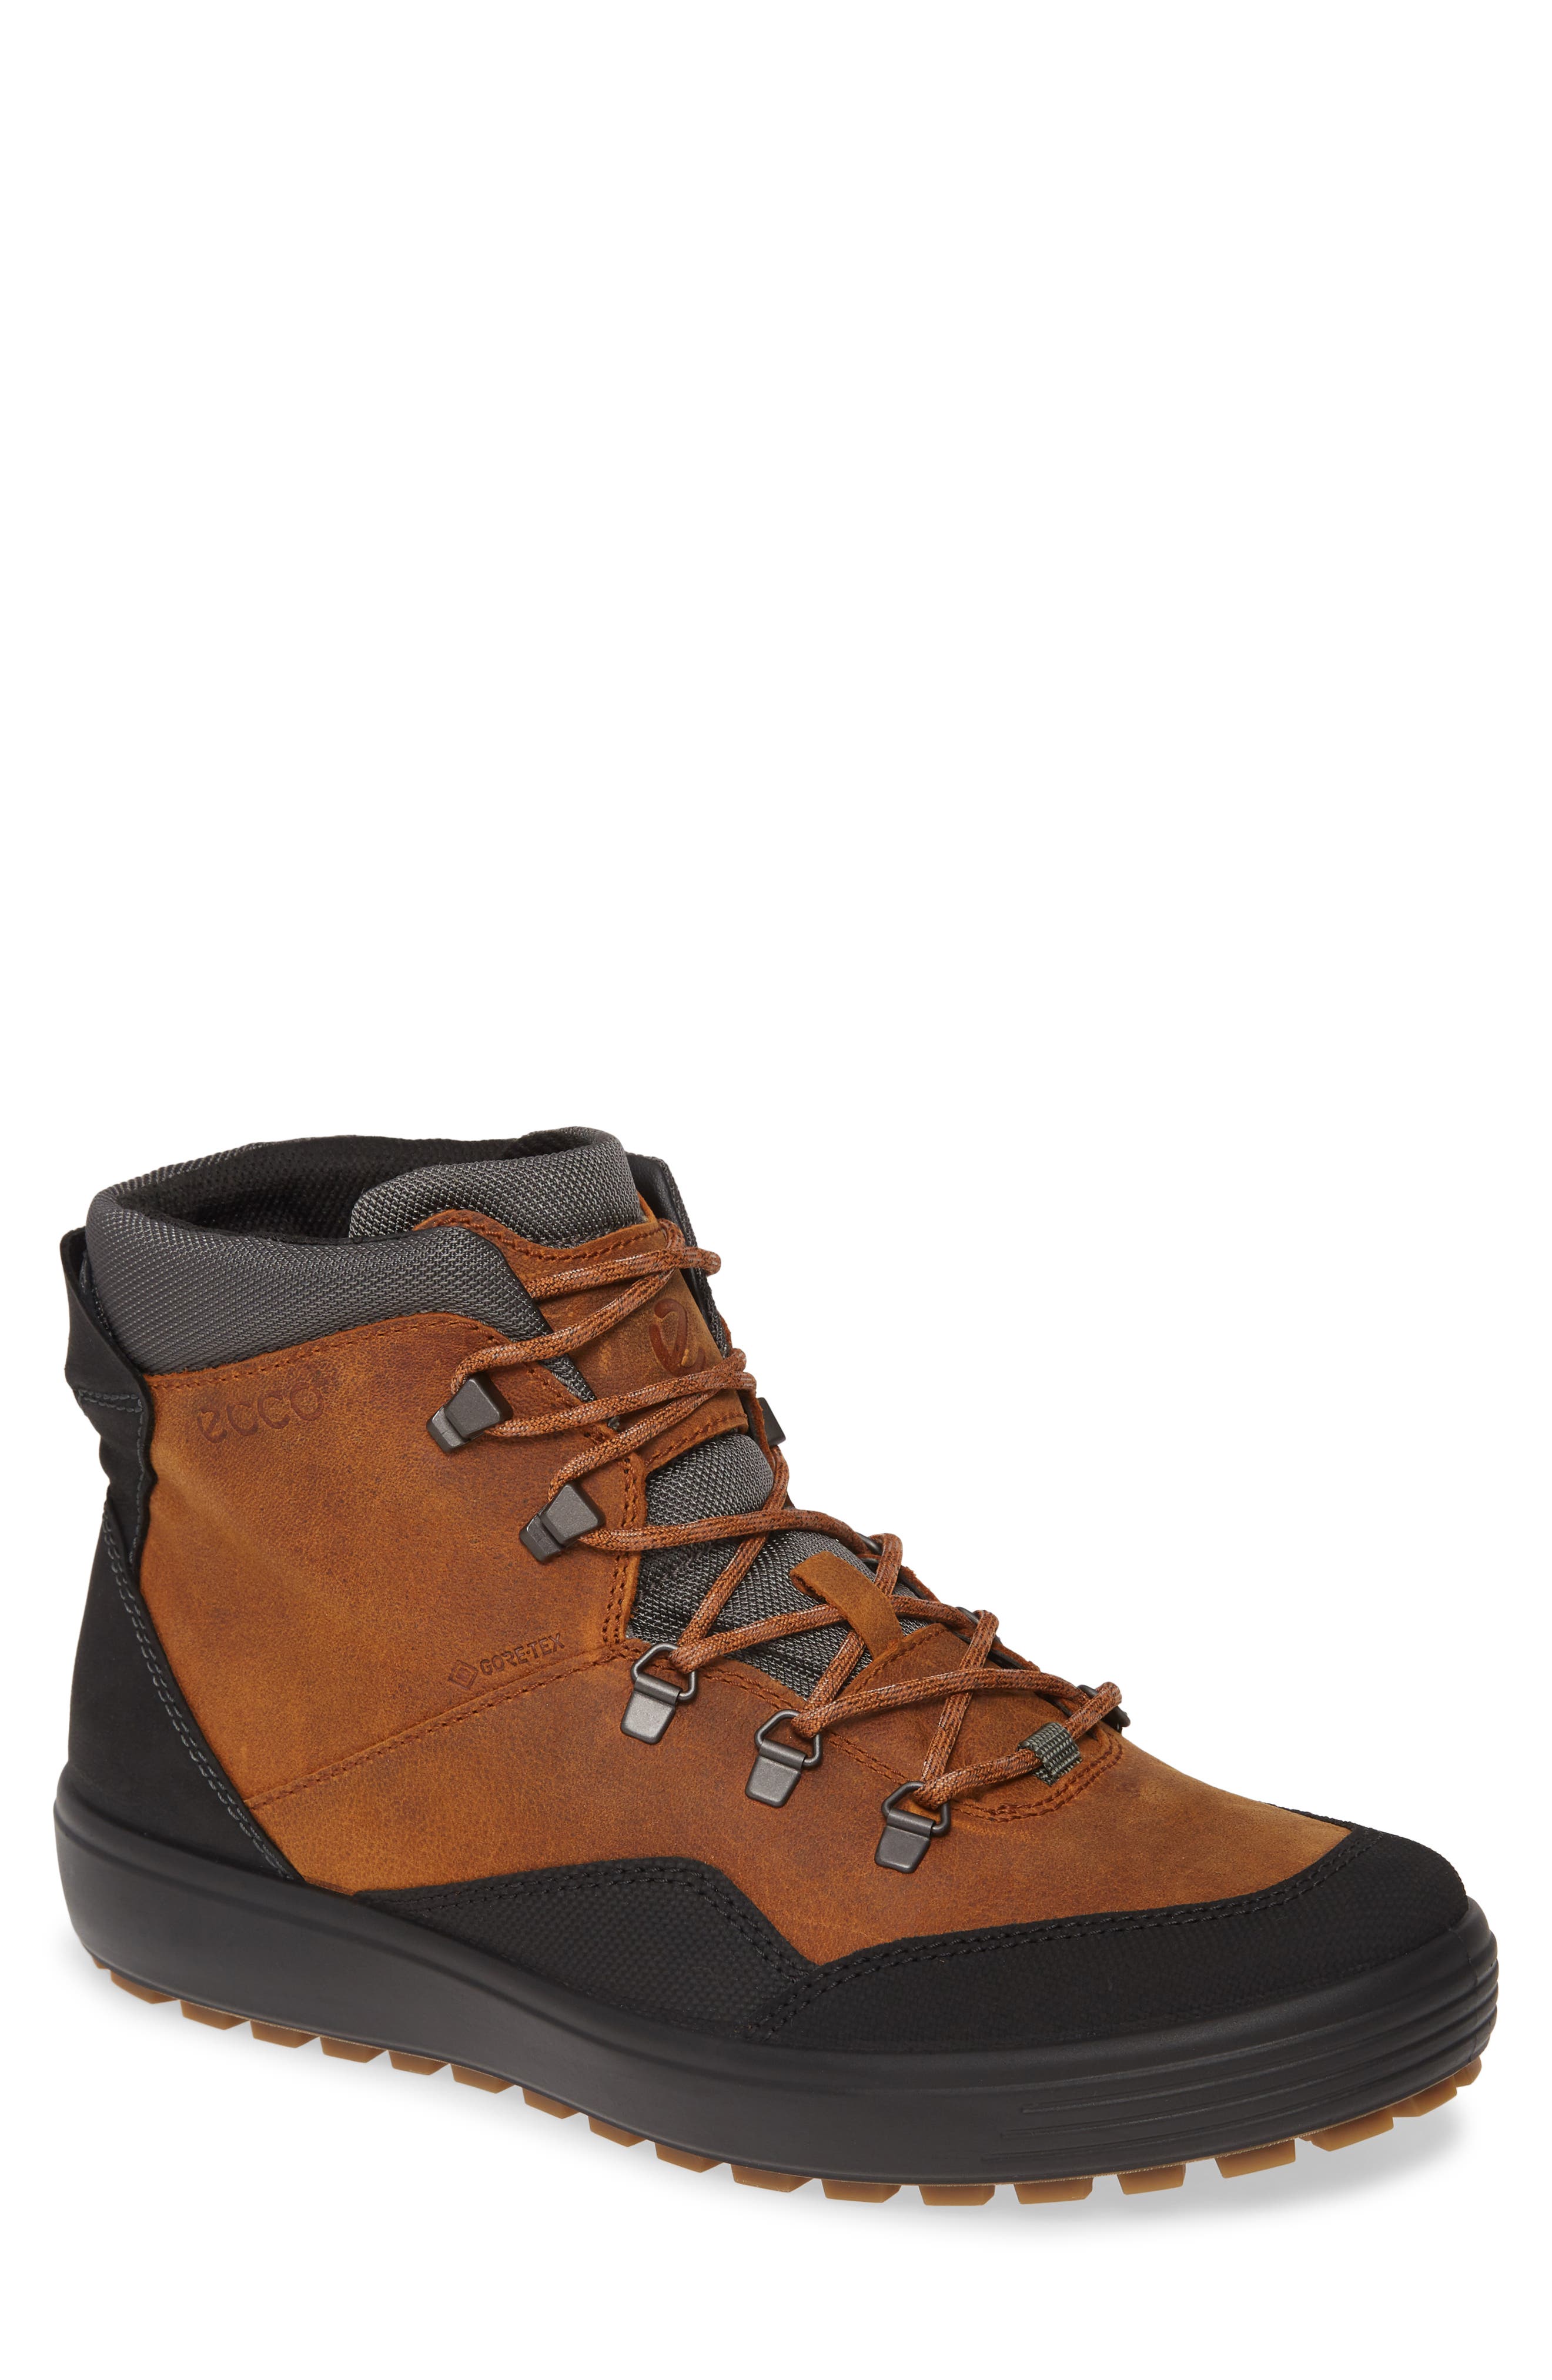 UPC 825840089929 product image for Men's Ecco Soft 7 Tred Terrain High Sneaker, Size 10-10.5US / 44EU - Brown | upcitemdb.com